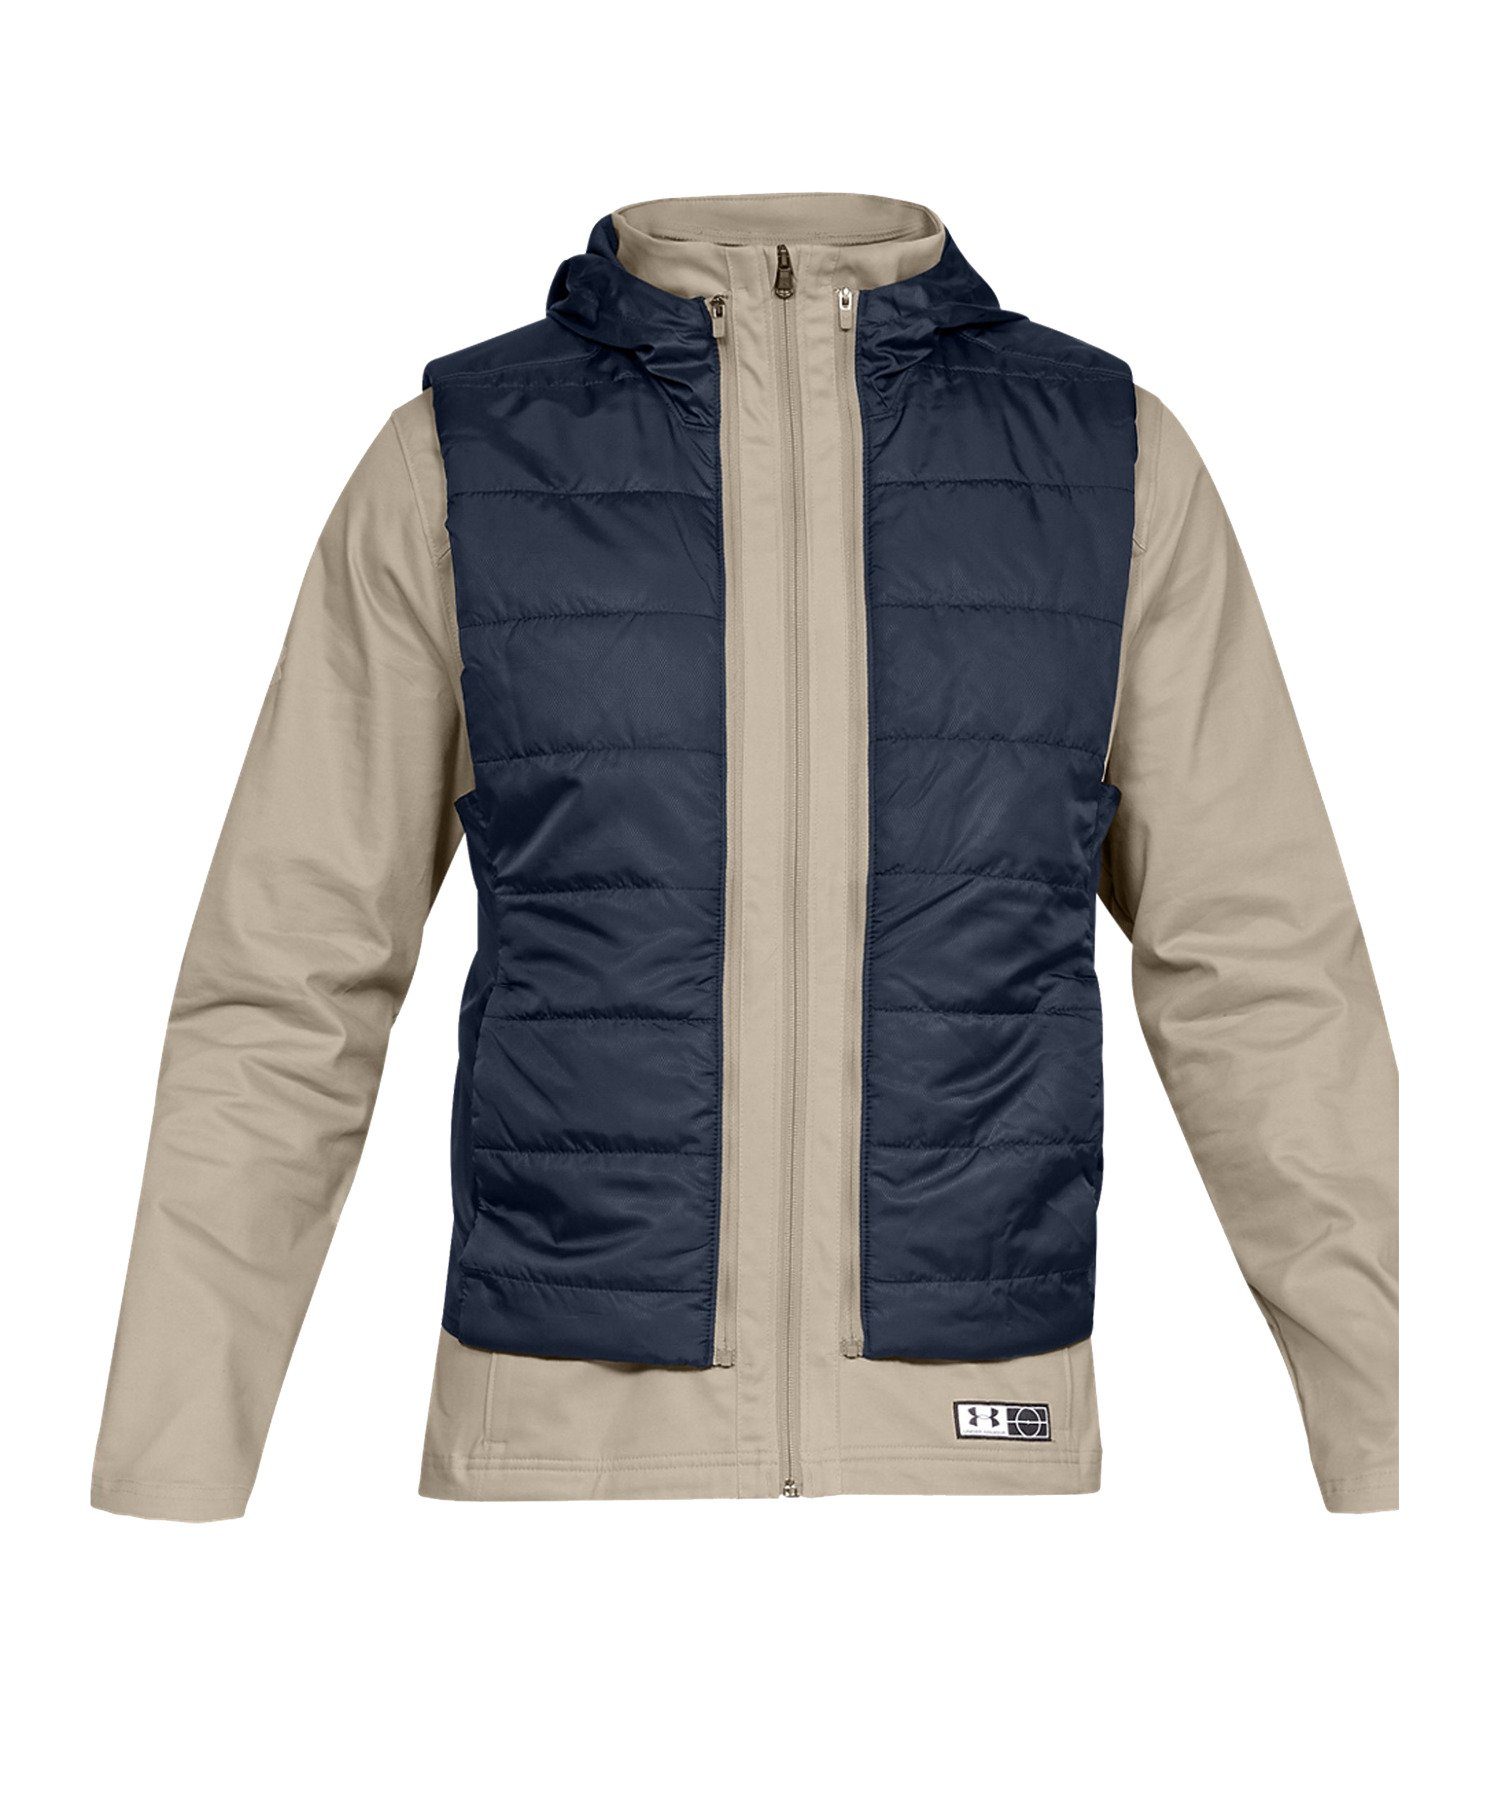 Under Armour® Sweatjacke »Accelerate Transport Jacke« online kaufen | OTTO